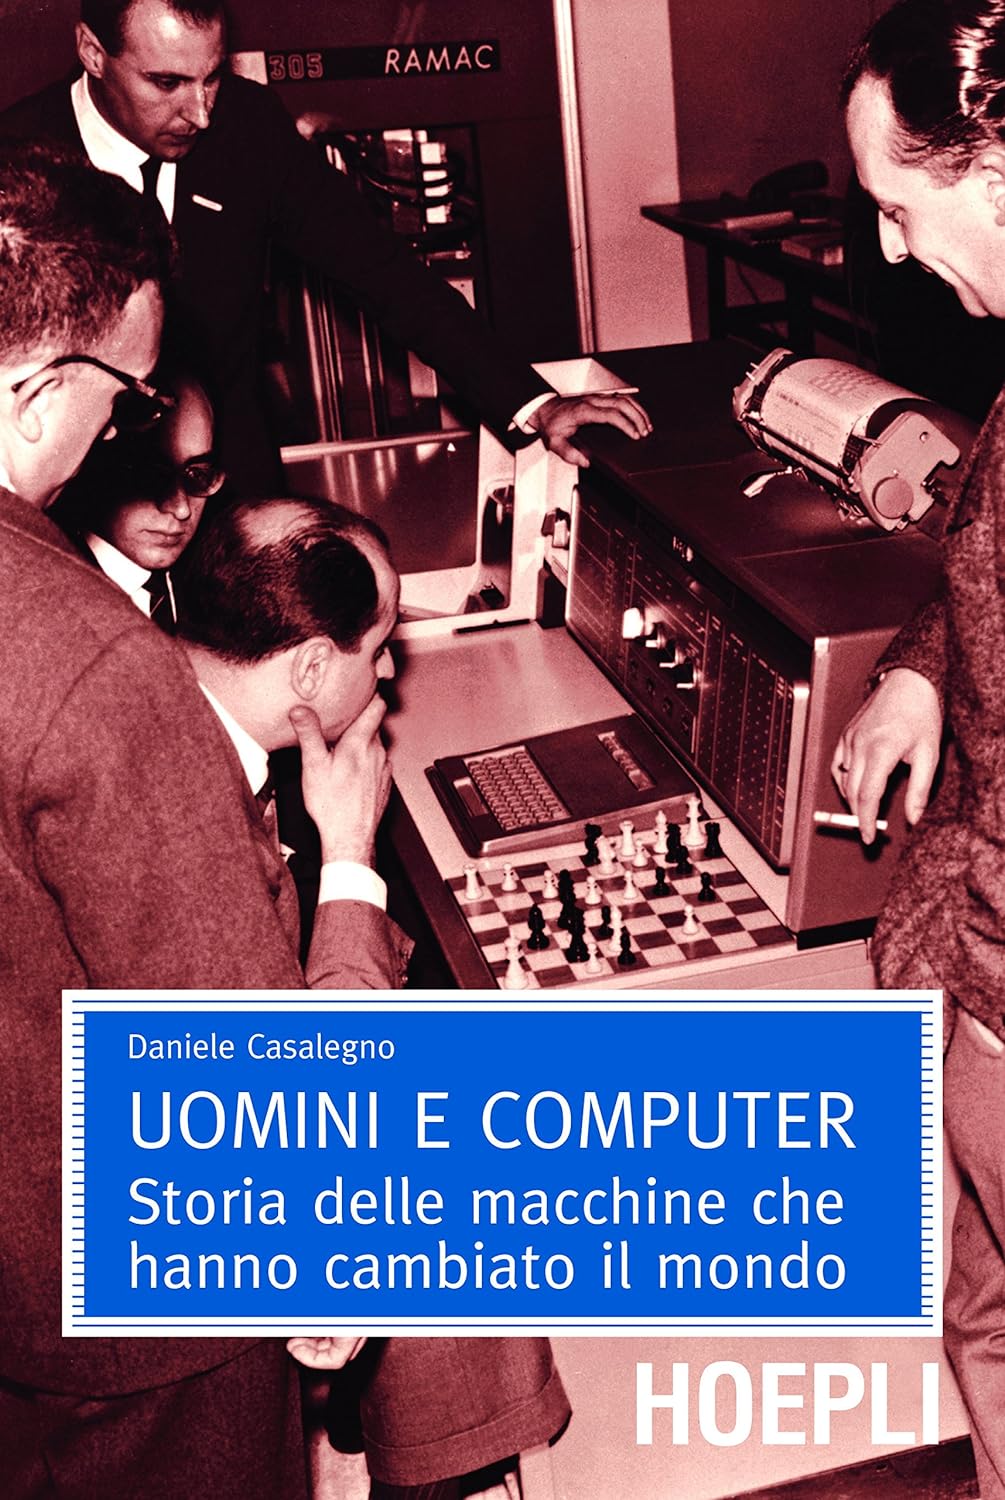 Uomini e computer (EBook, italiano language, Hoepli)